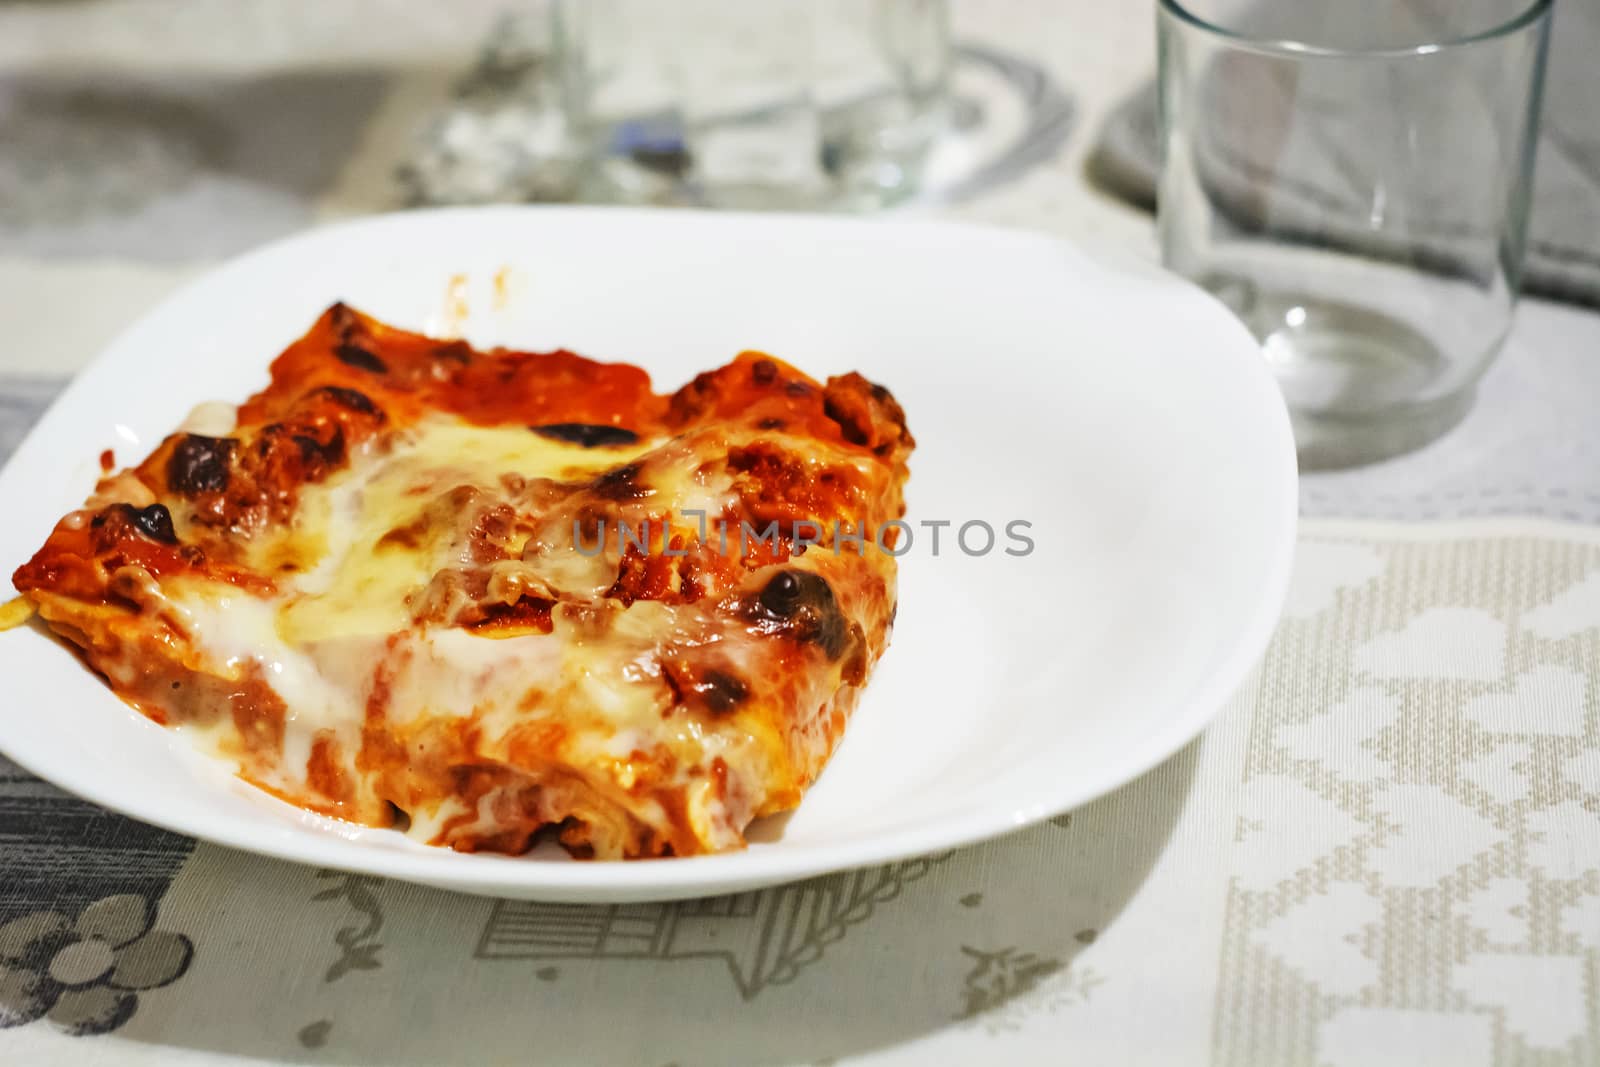 close-up view of a portion of lasagna by rarrarorro